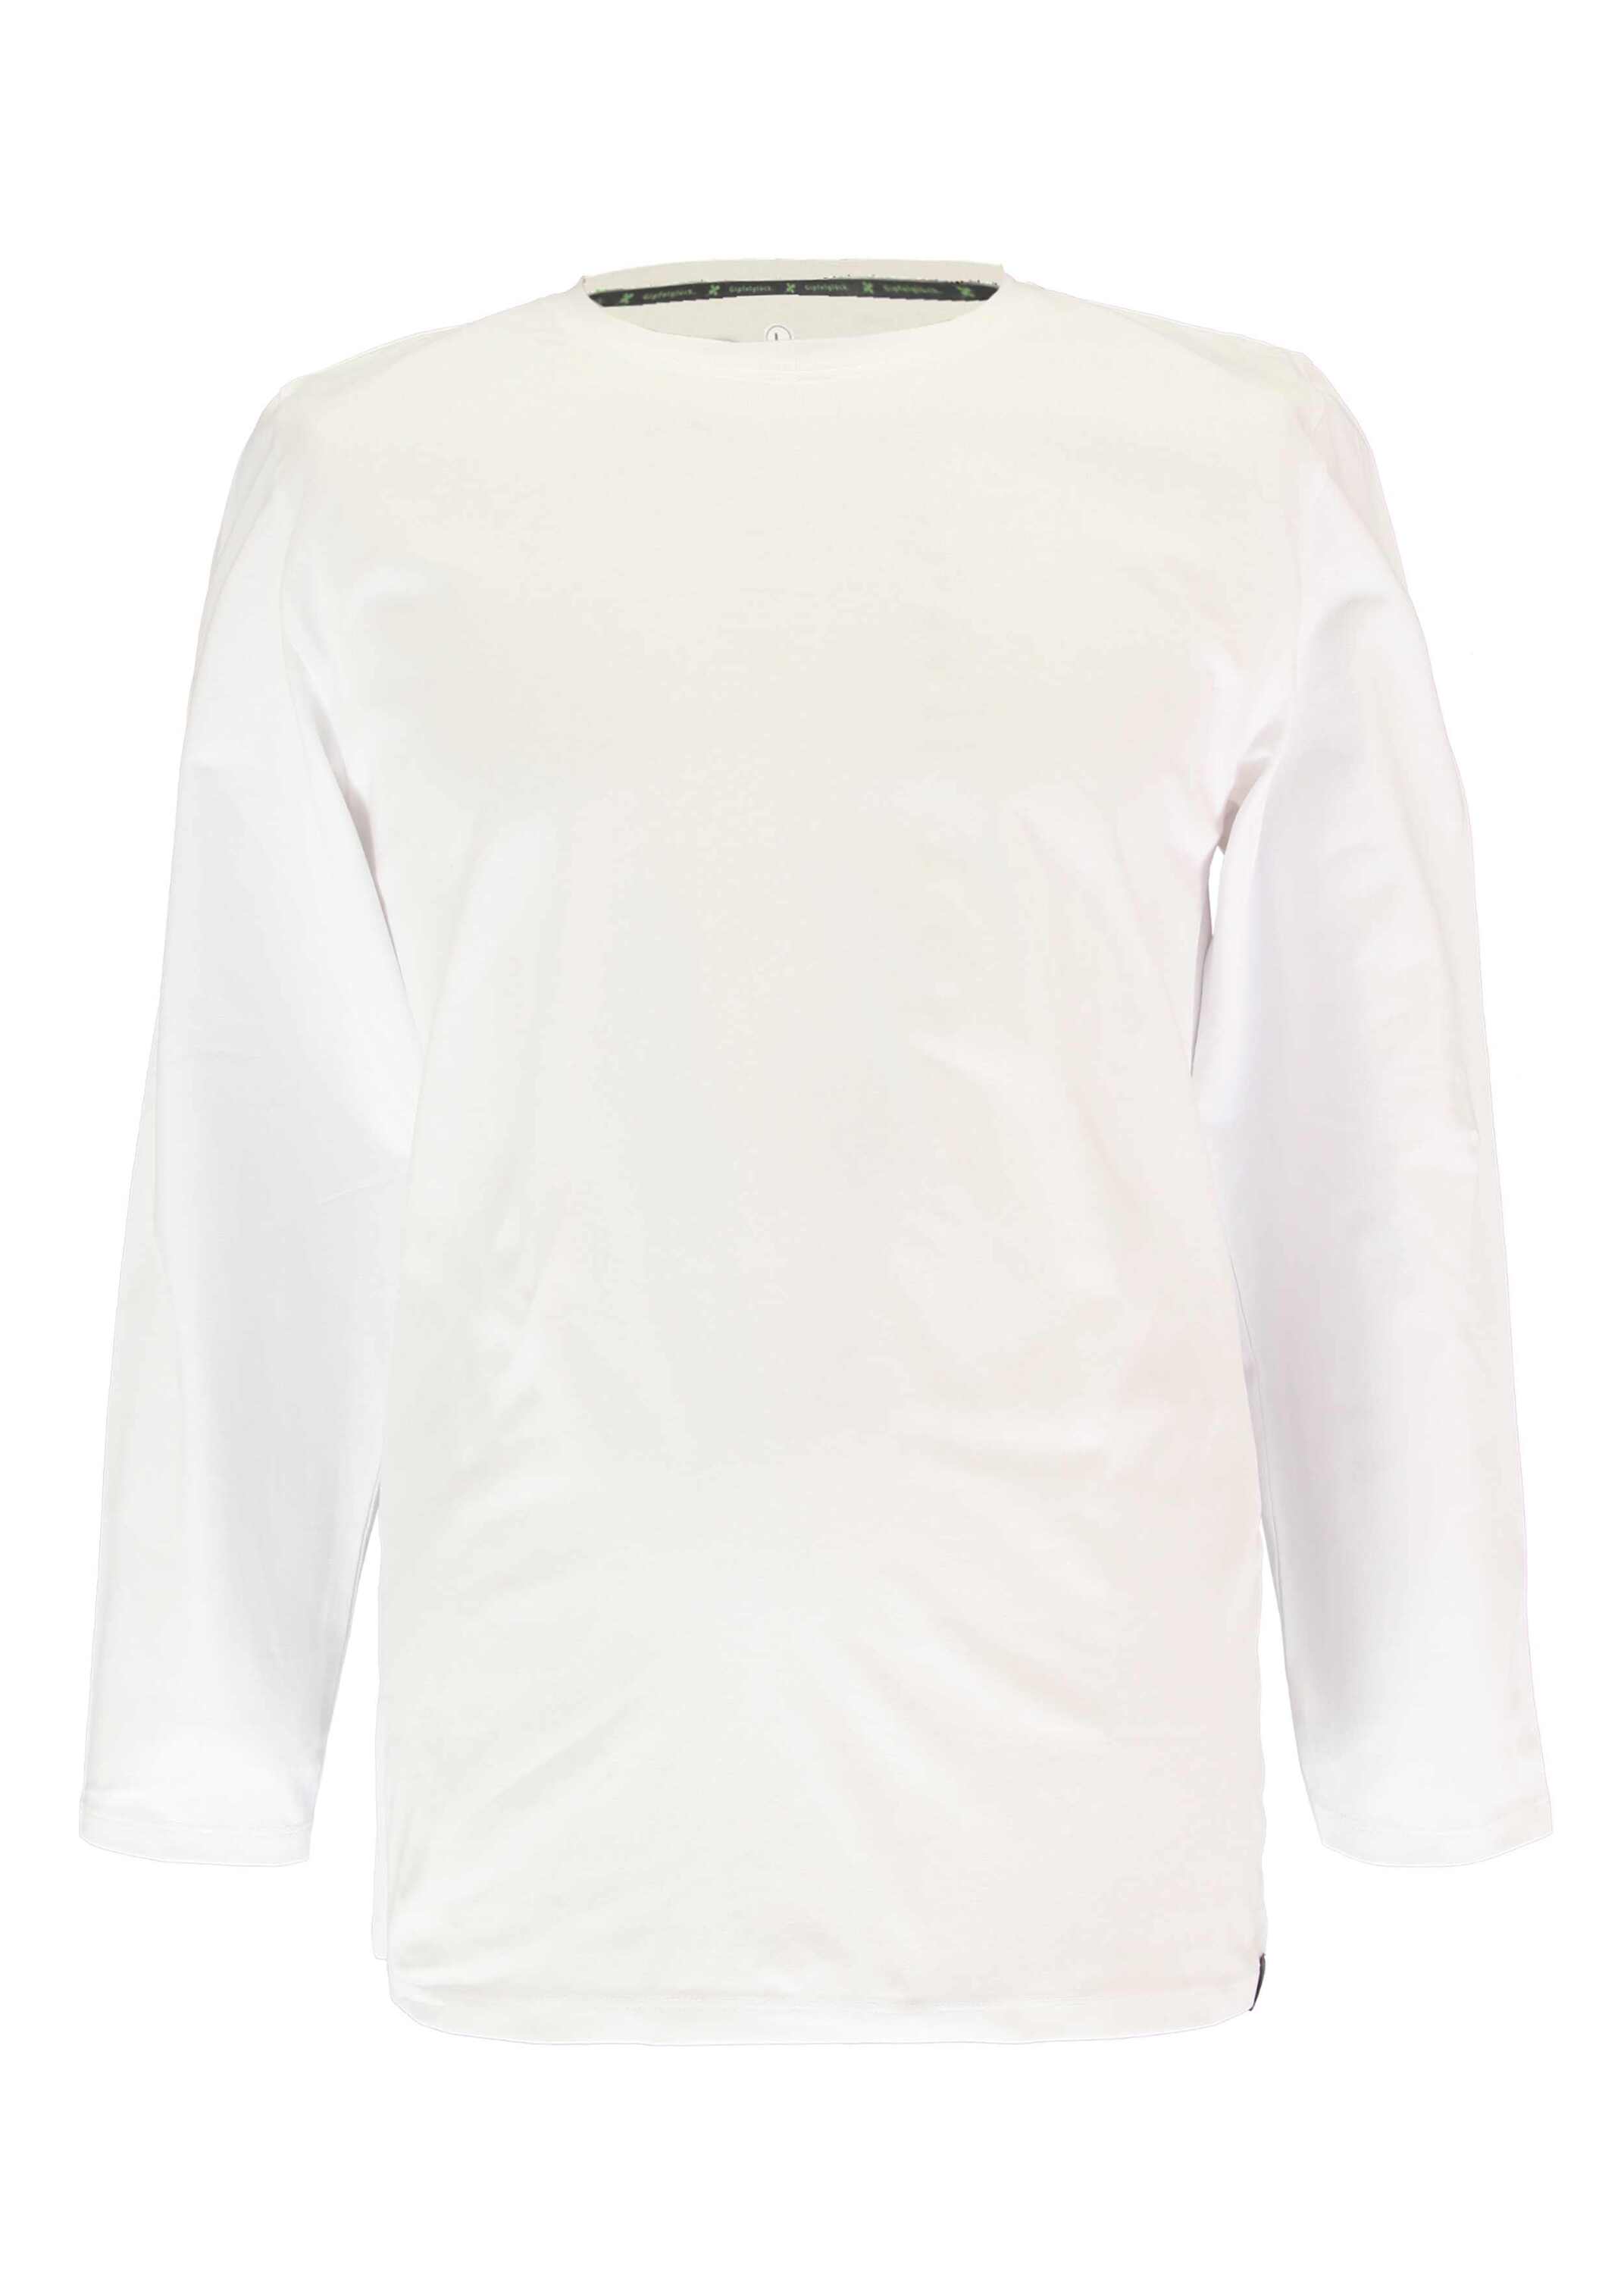 Рубашка Gipfelglück Wandershirt Ludwig, цвет Optic White